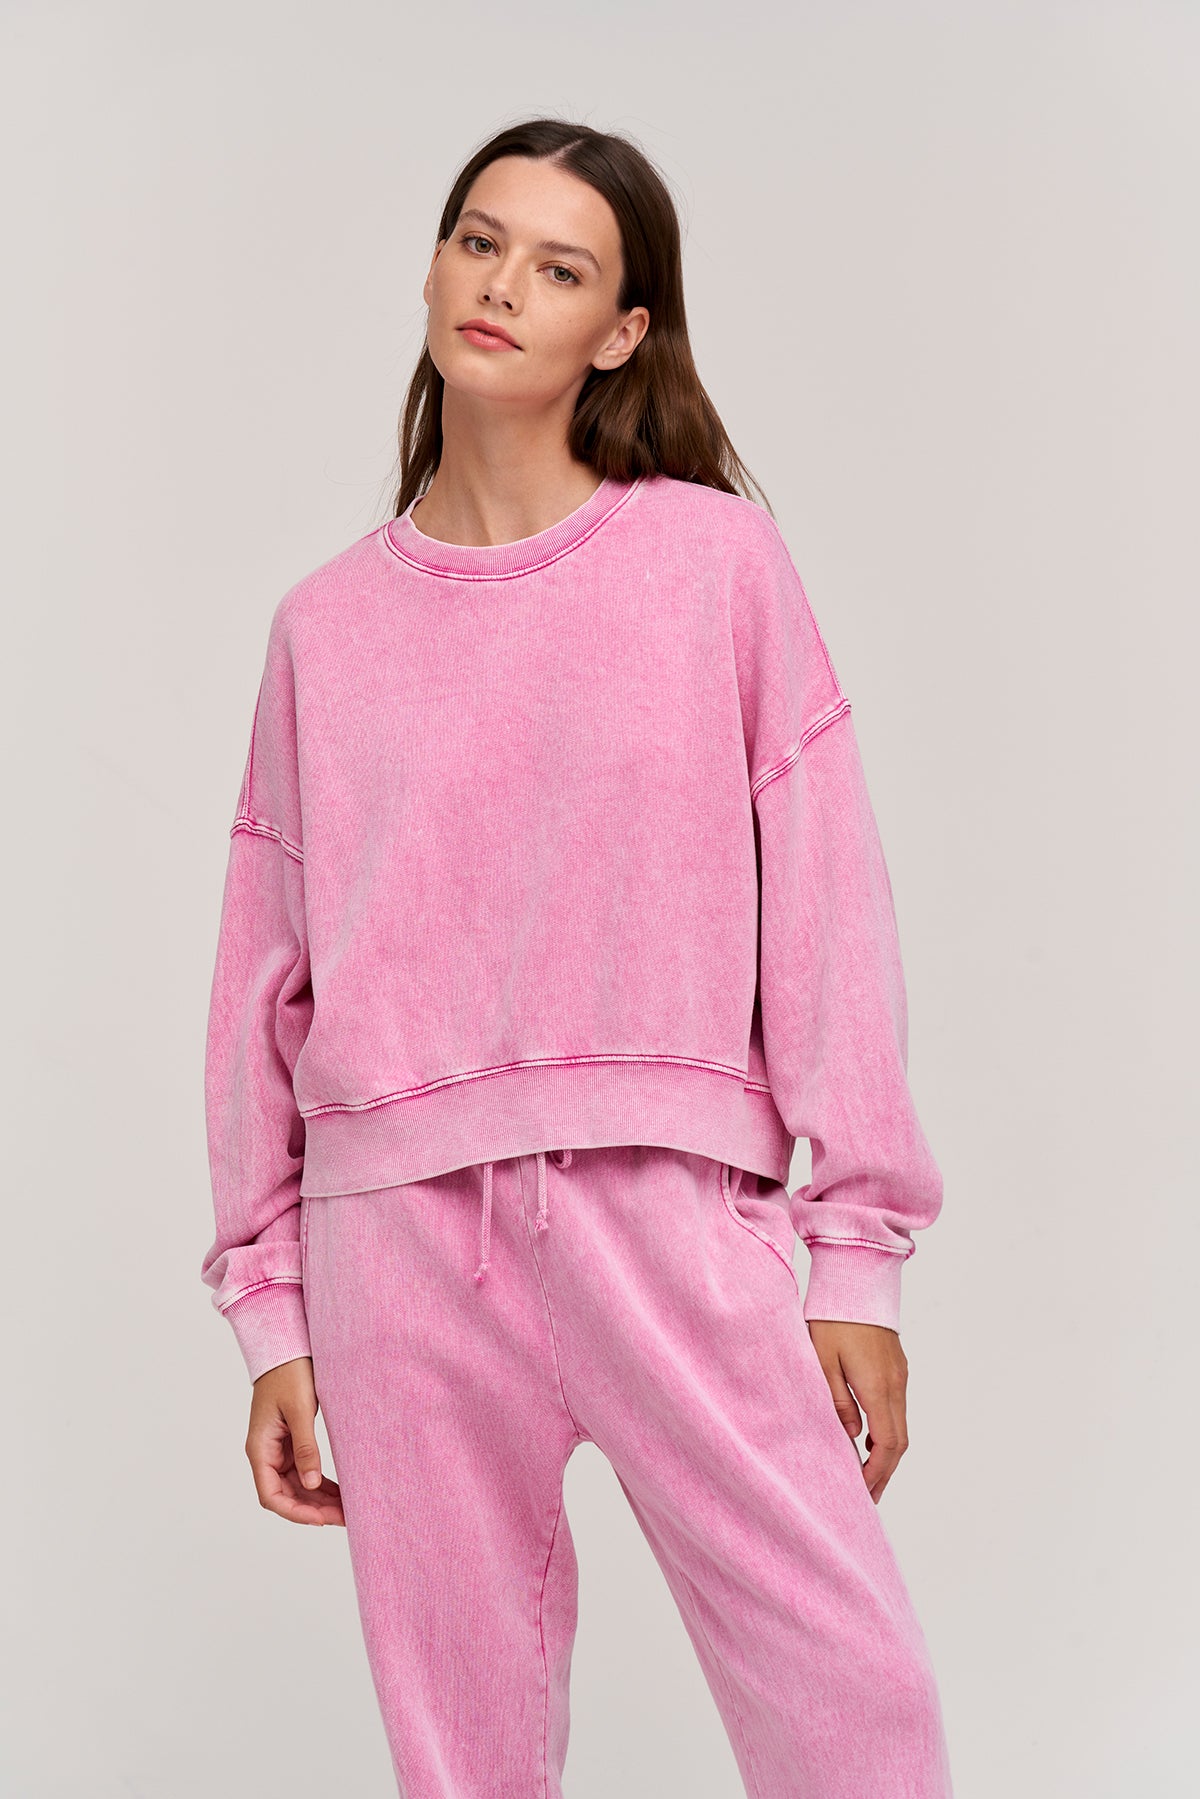 lindsey fleece sweatshirt pink front-24740324245697